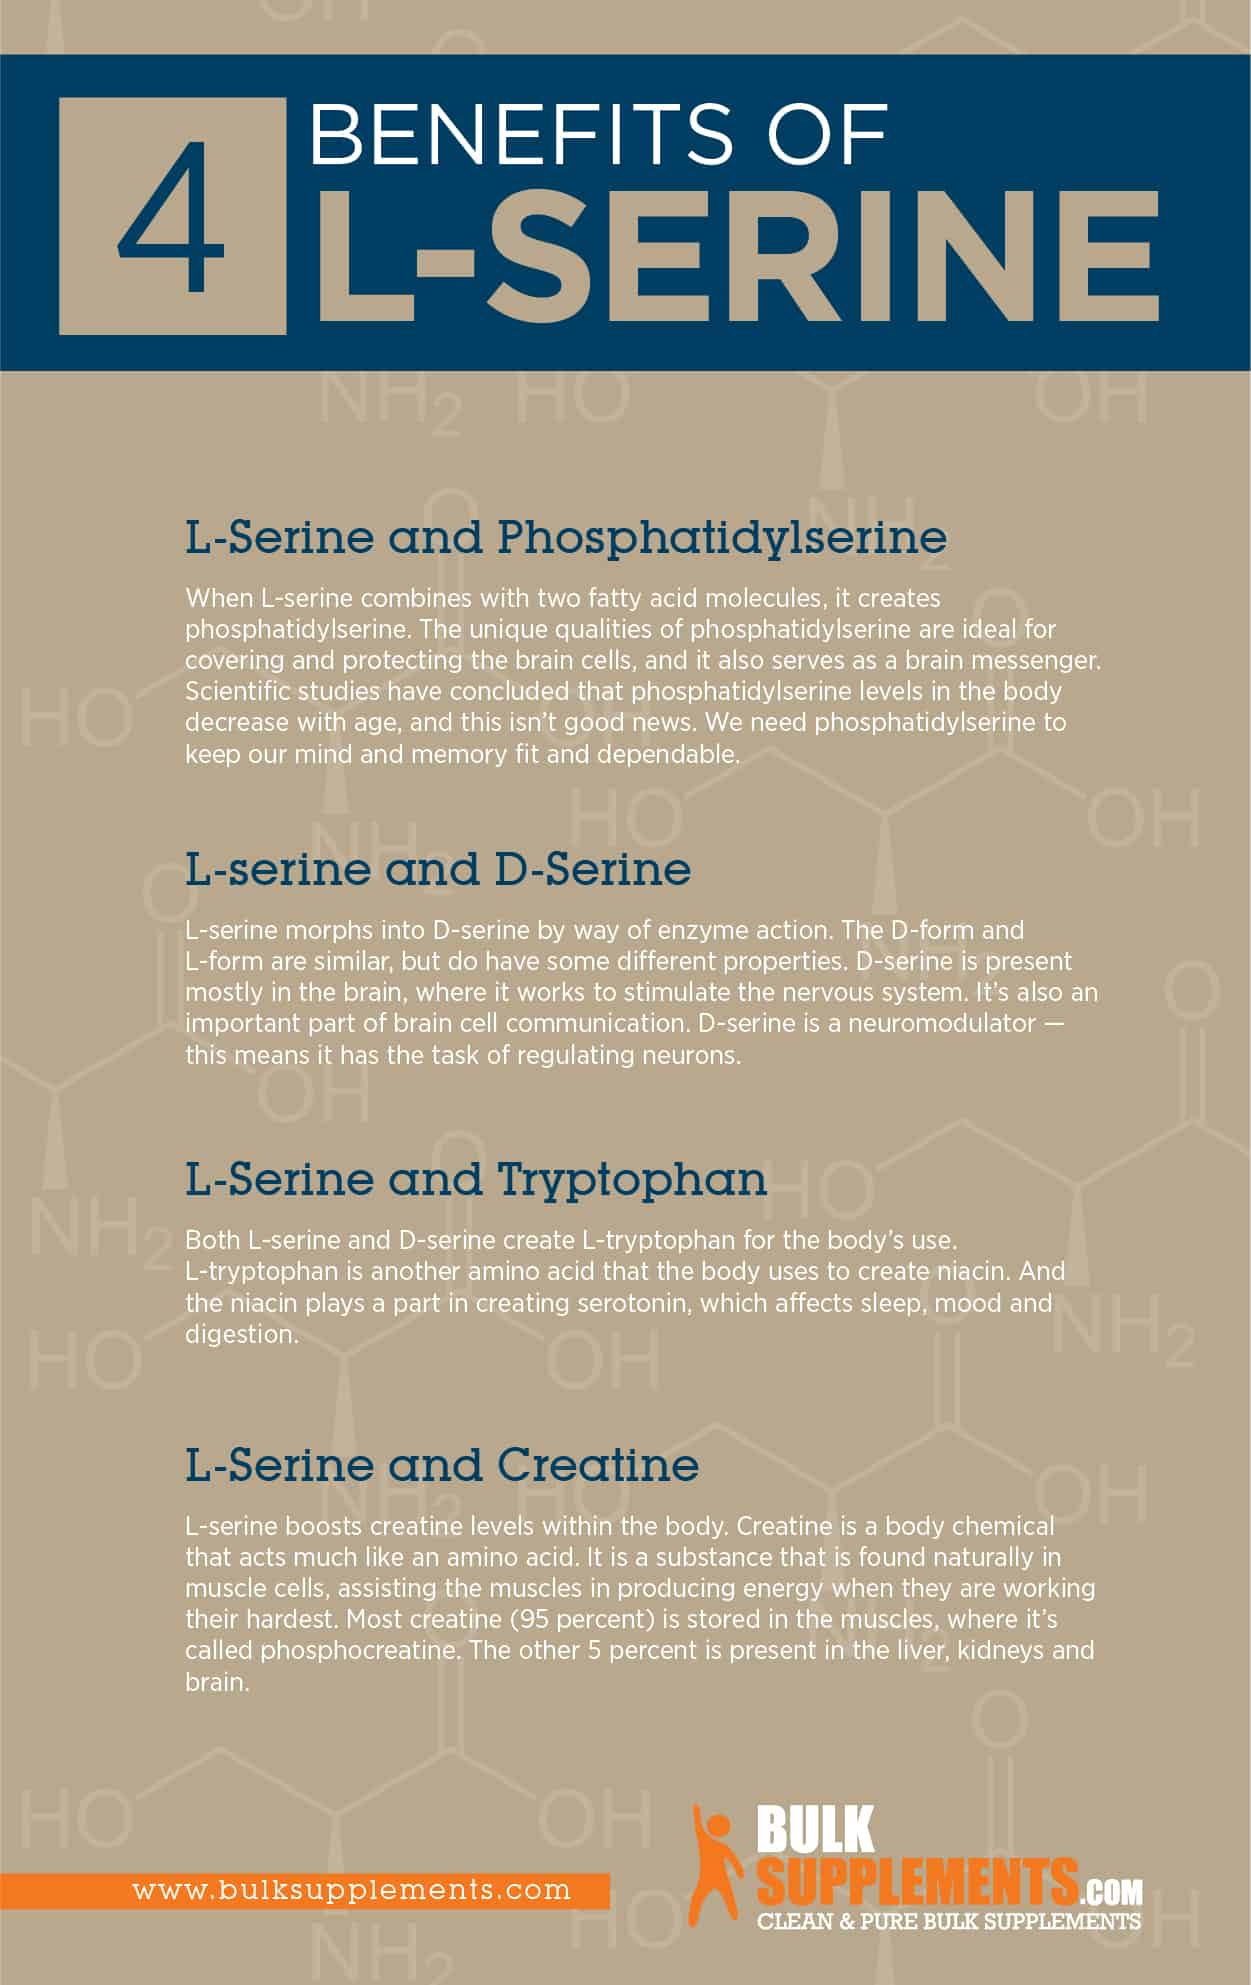 Benefits of L-serine supplements